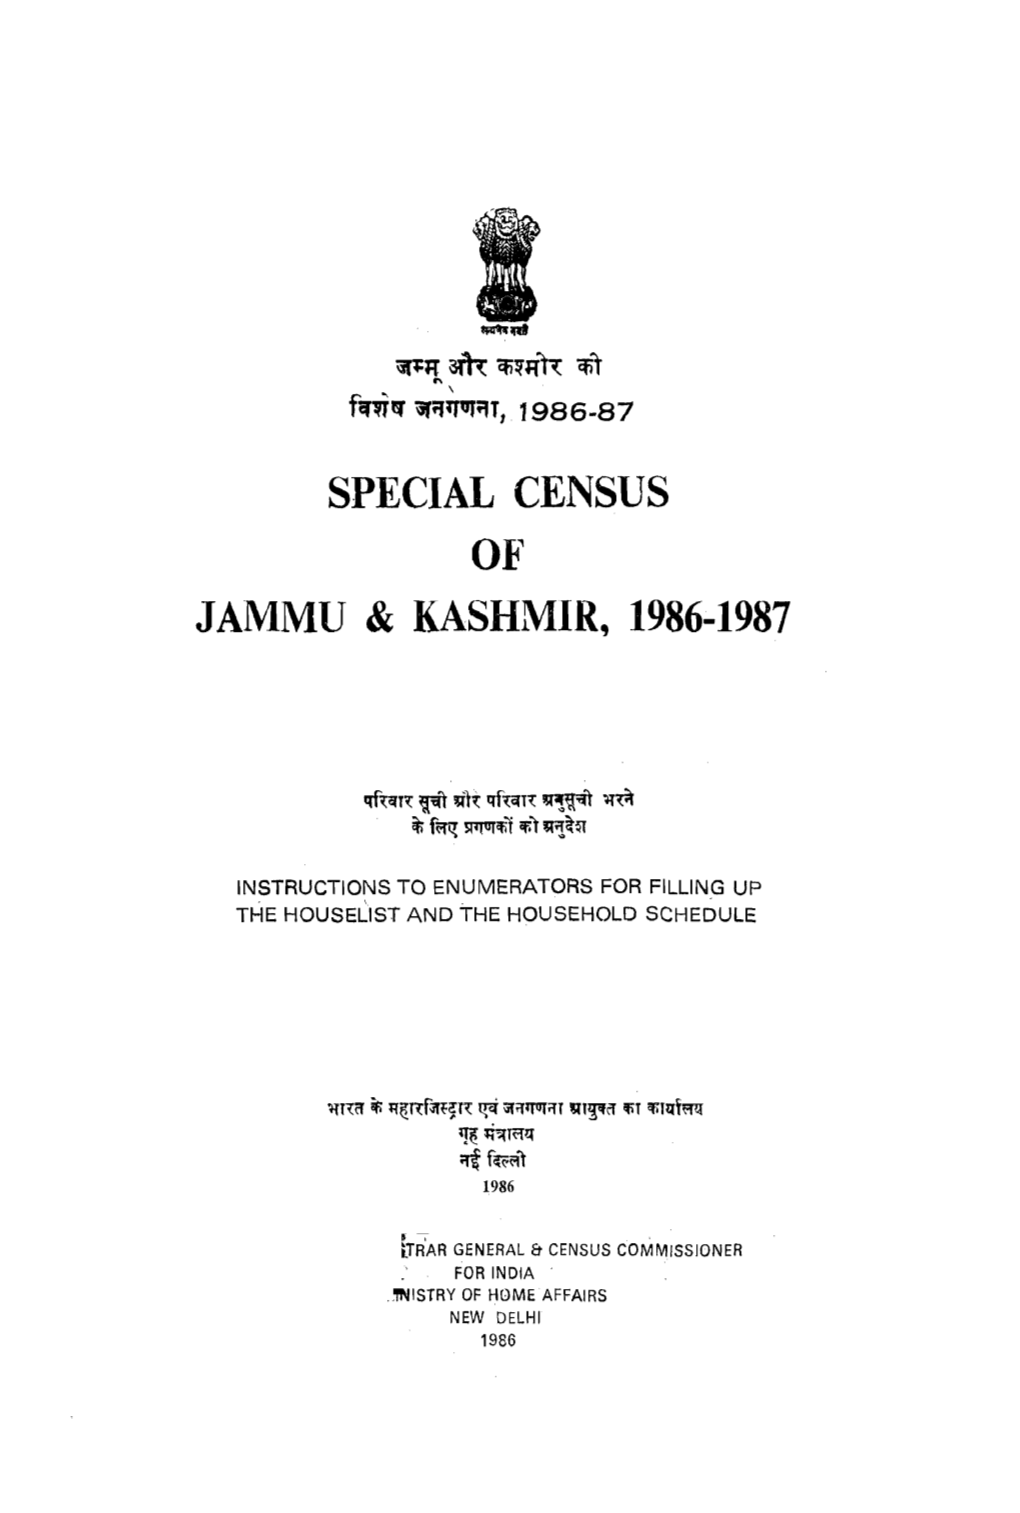 Special Census of Jammu & Kashmir, 1986-1987